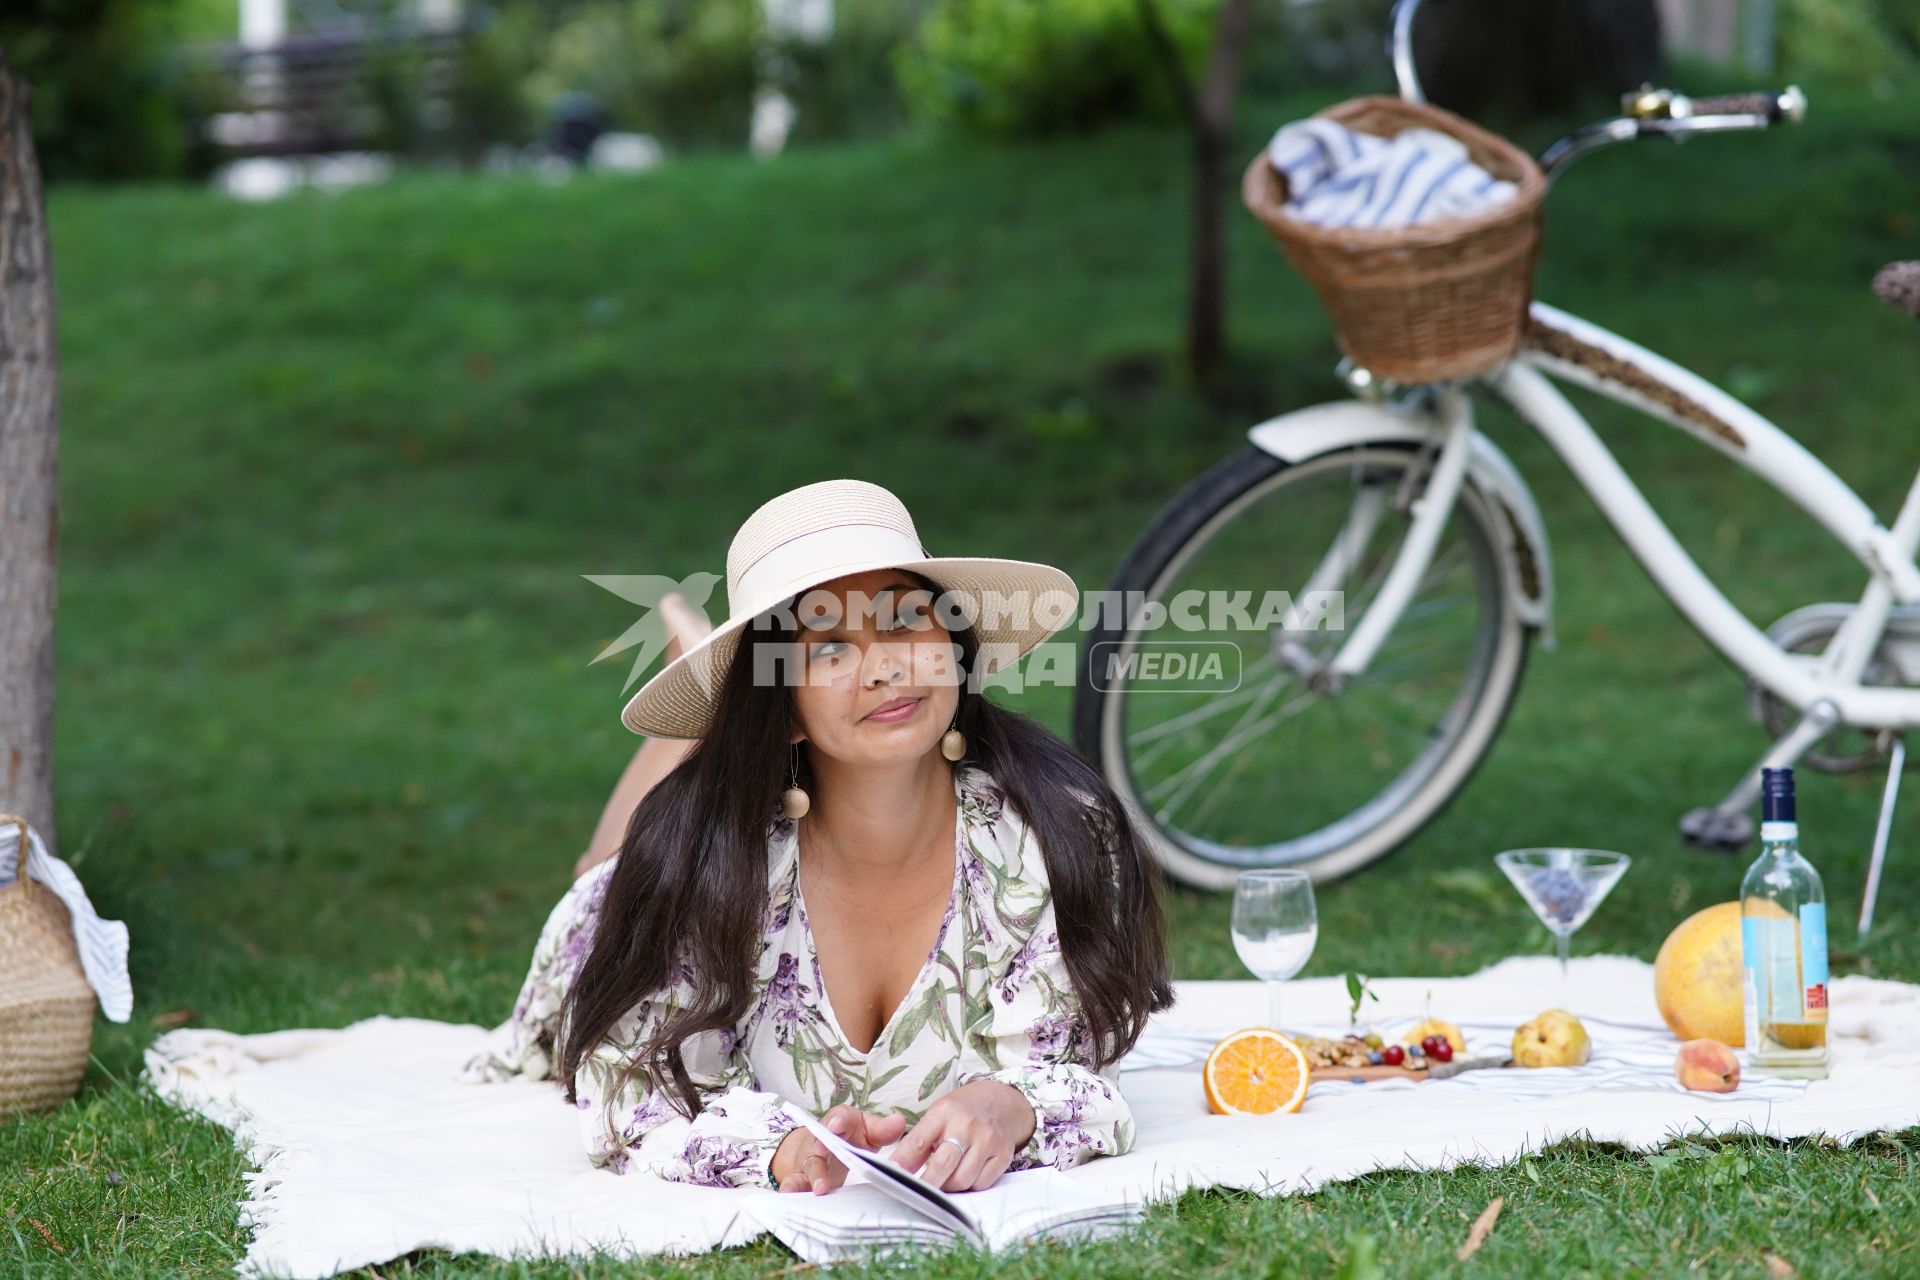 Самара. Девушка во время пикника в парке.